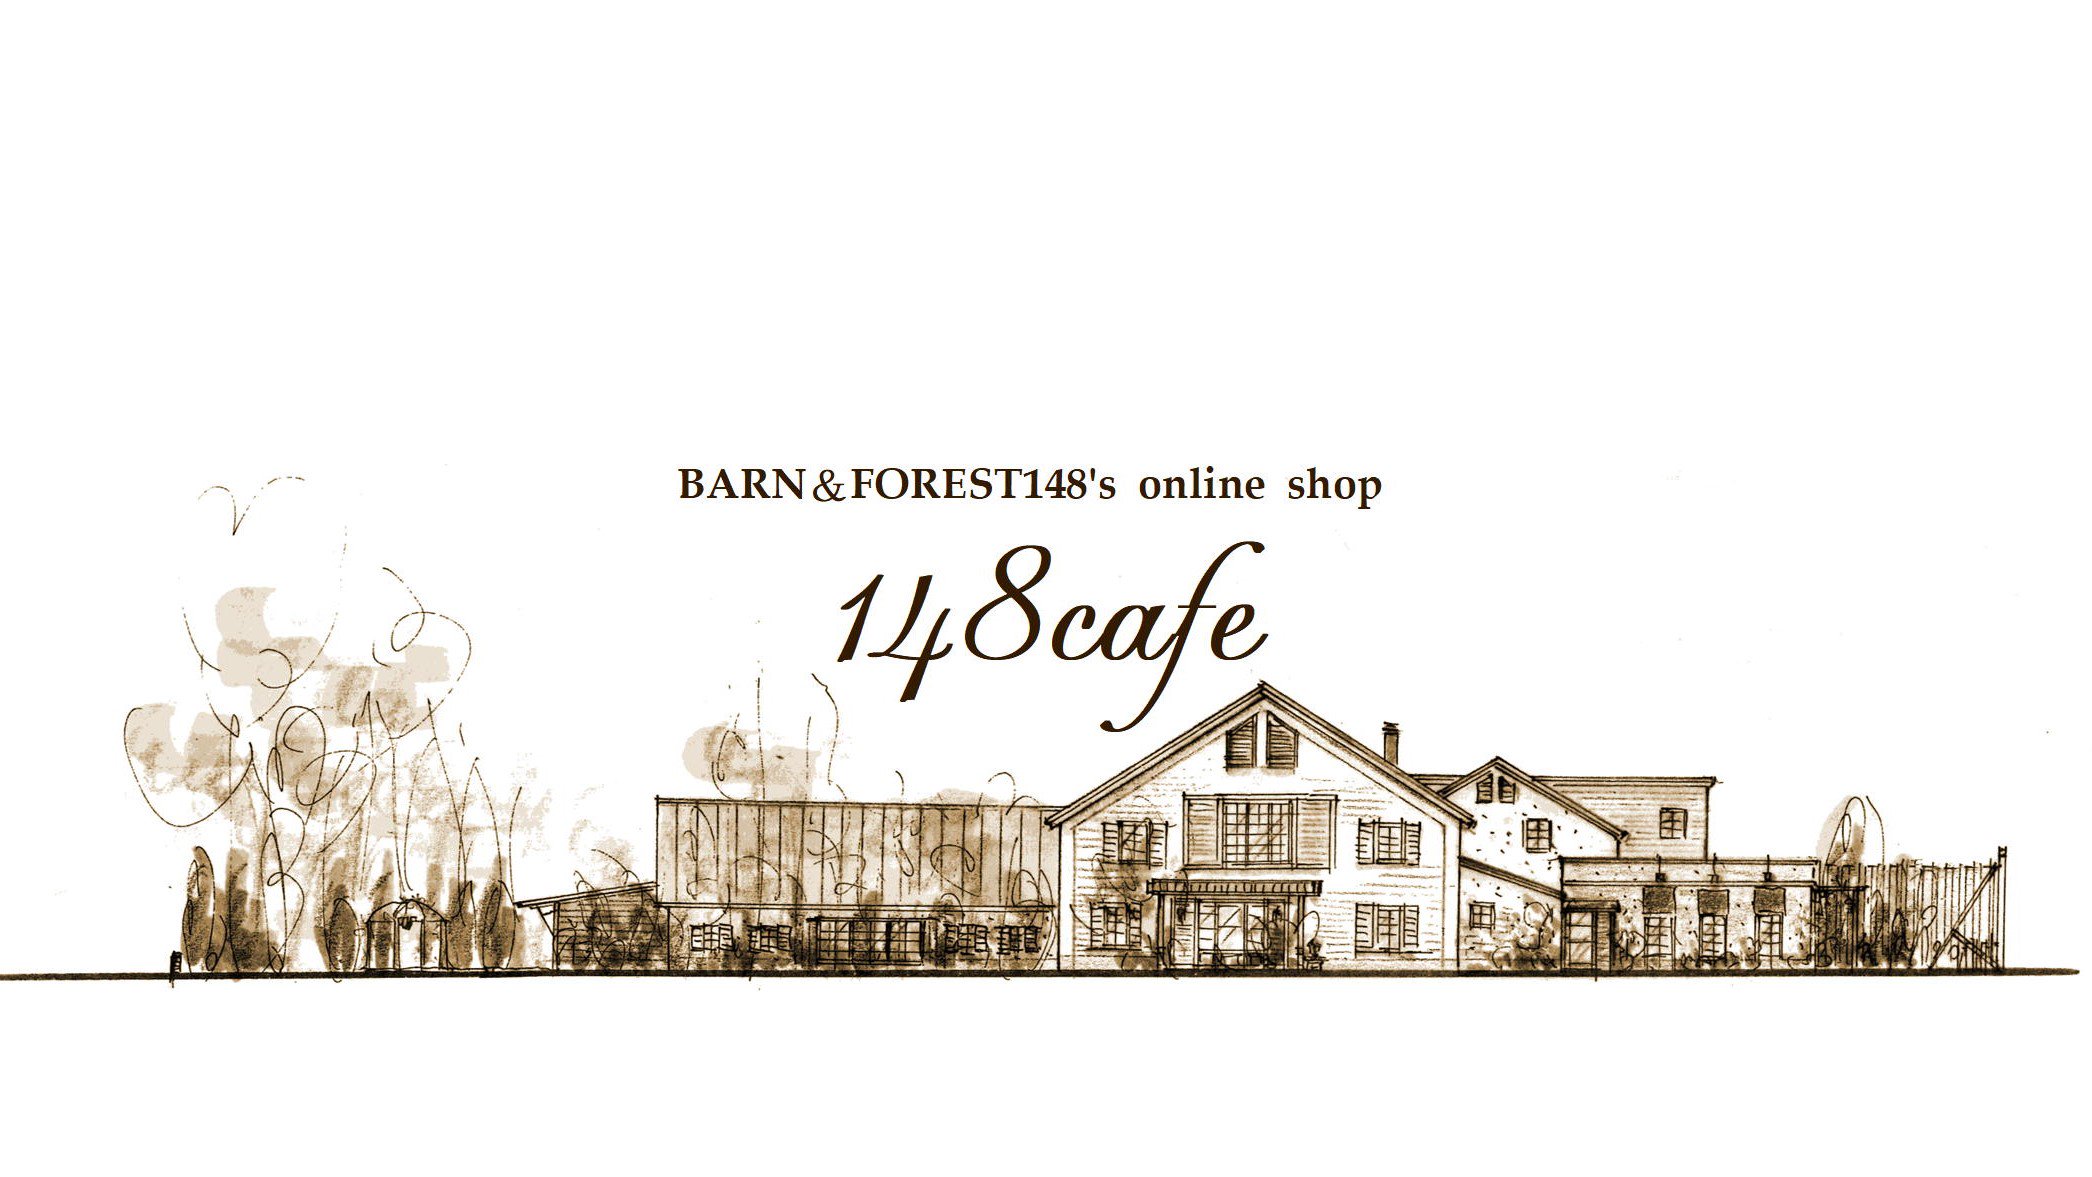 148cafe onlline shop  ” produced by Barn&Forest148”